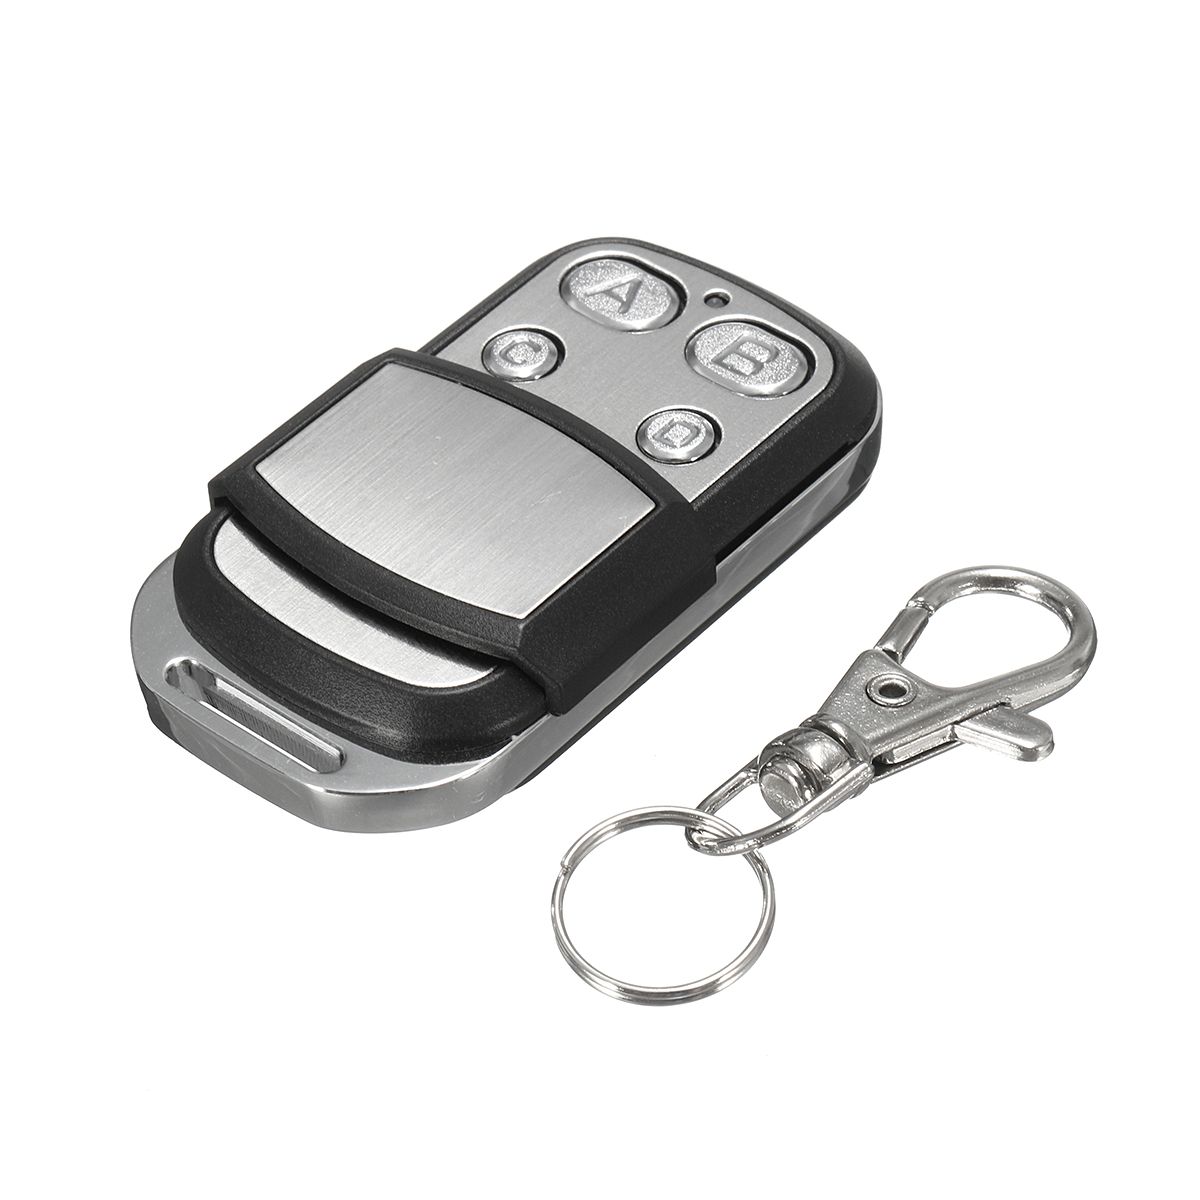 43392Mhz-Garage-Door-Gate-Remote-Control-Key-for-Mhouse-MyHouse-TX4-TX3-GTX4-1154500